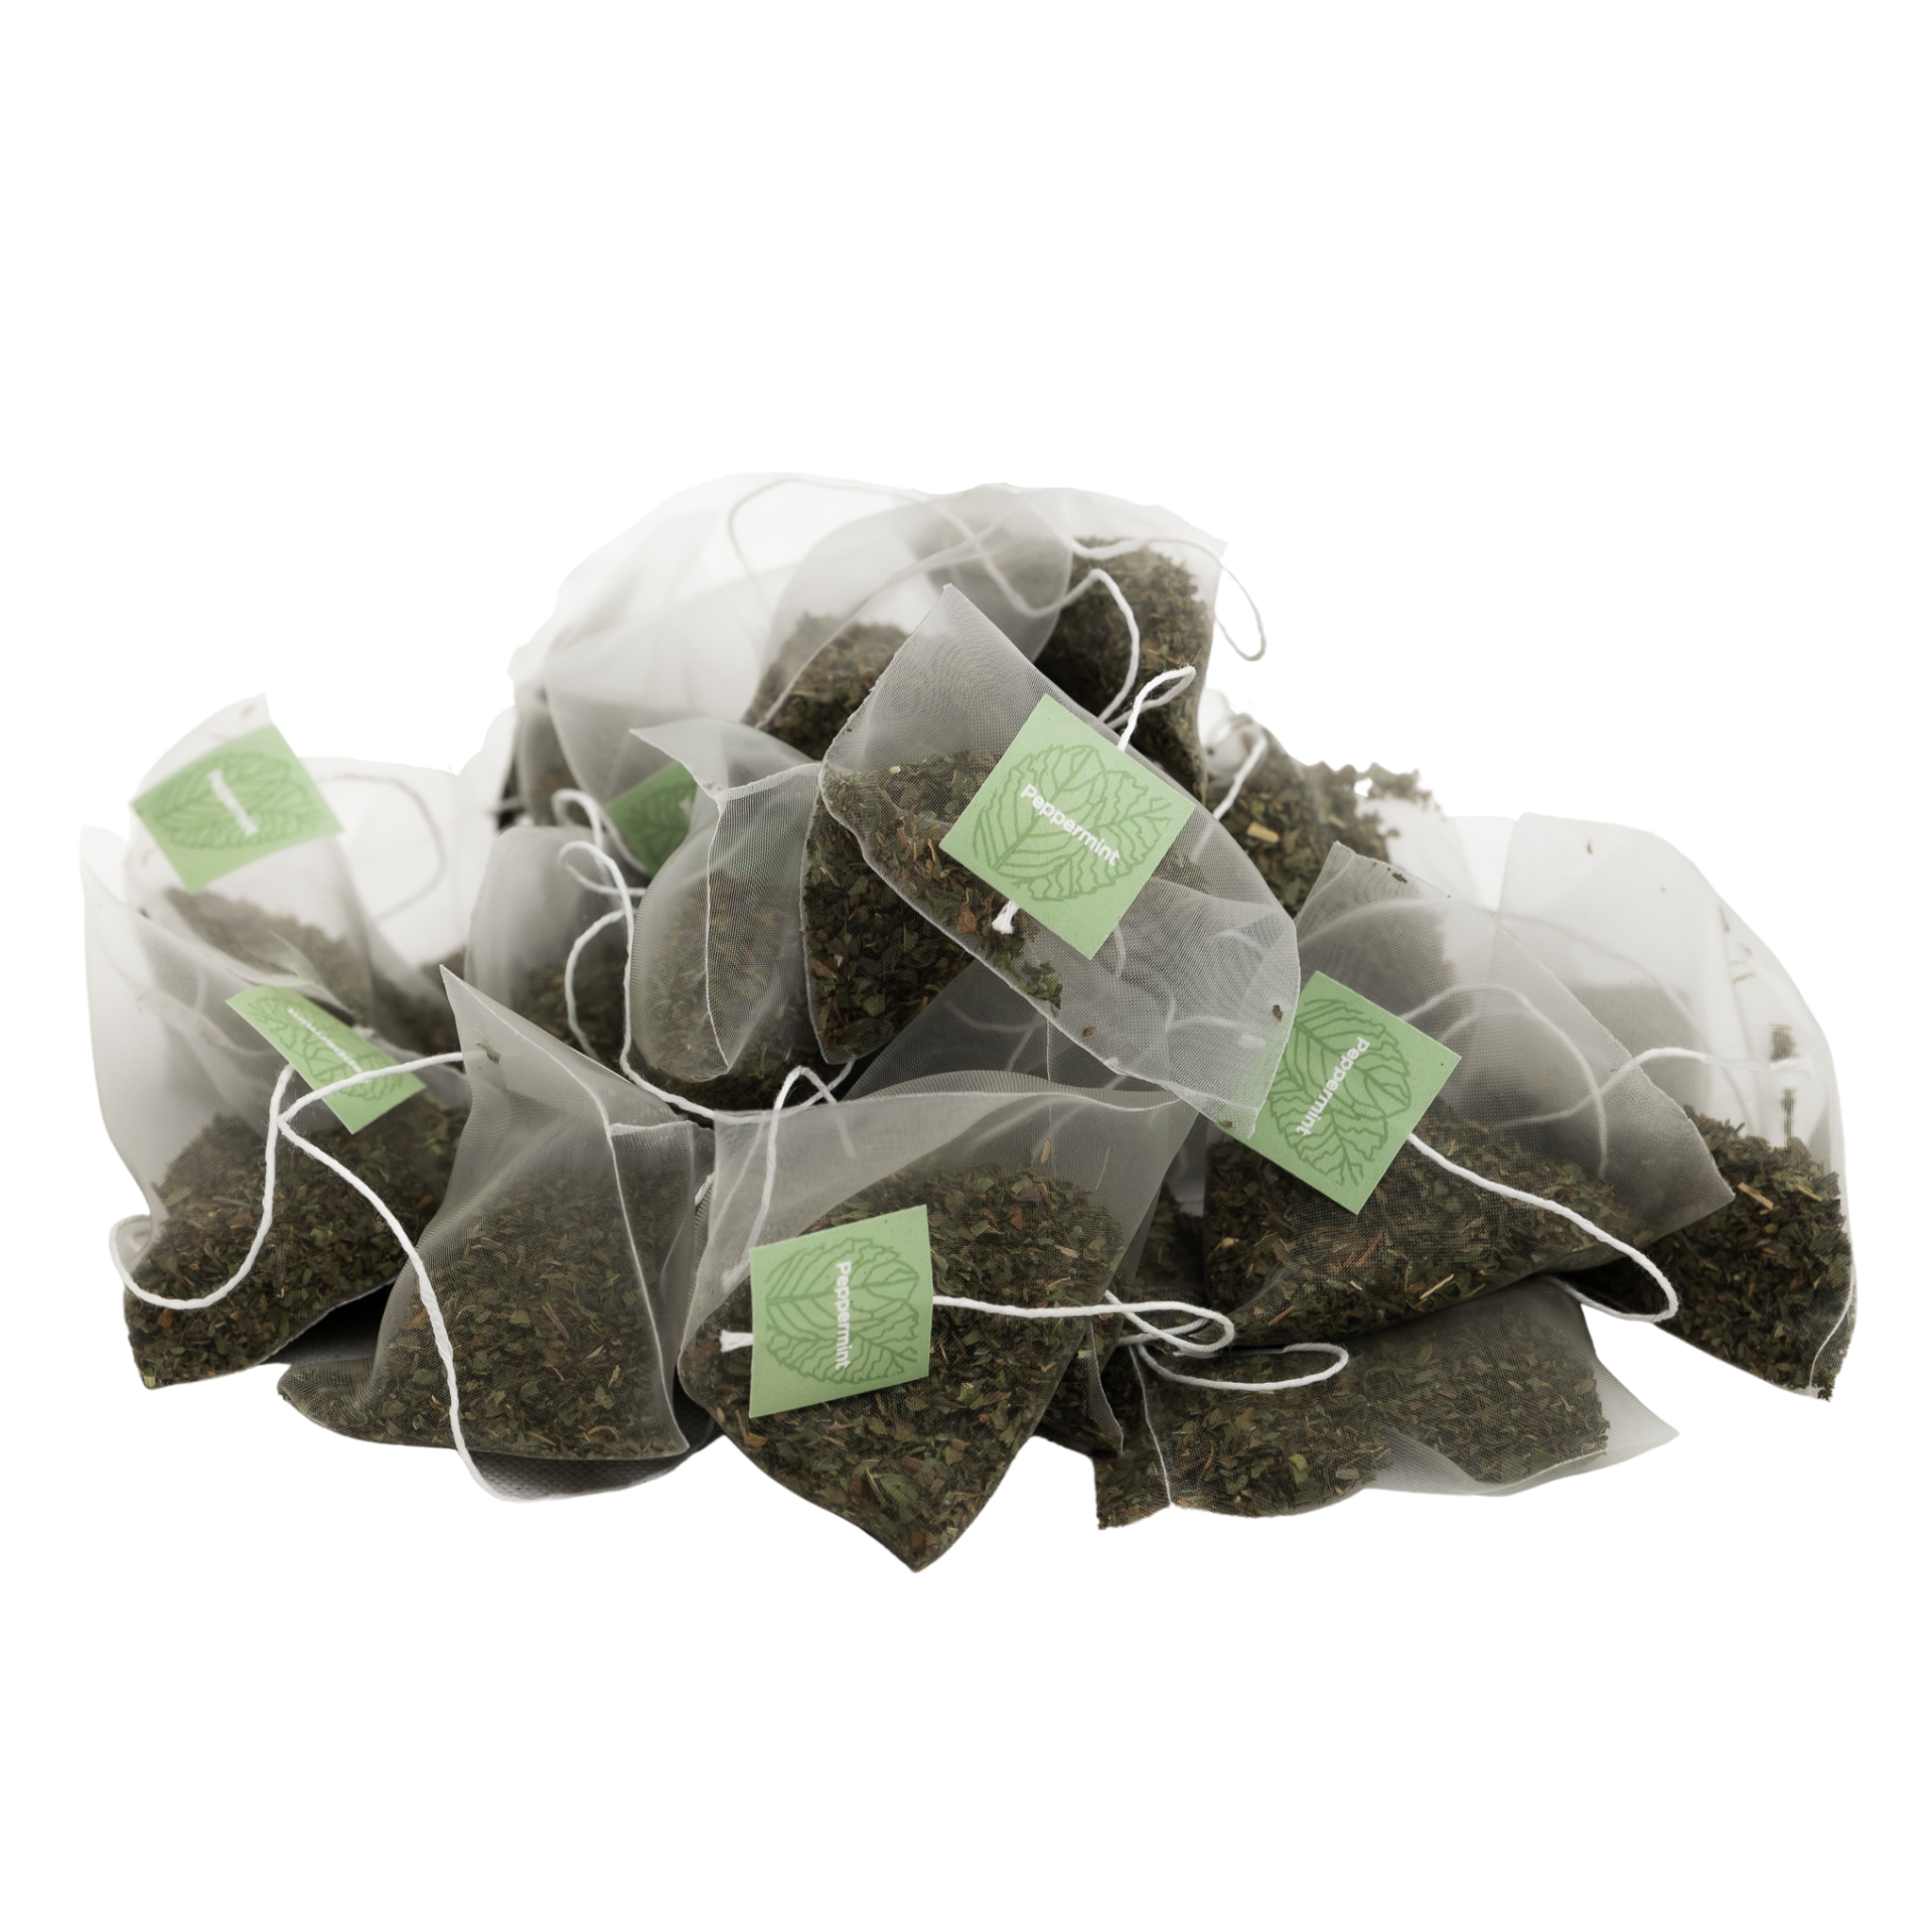 TEA MATE Loose Leaf Triangle Tea Baggers With TEA MATE Organic Peppy Mint Peppermint Loose Leaf Tea In Premium Biodegradable Tea Bags